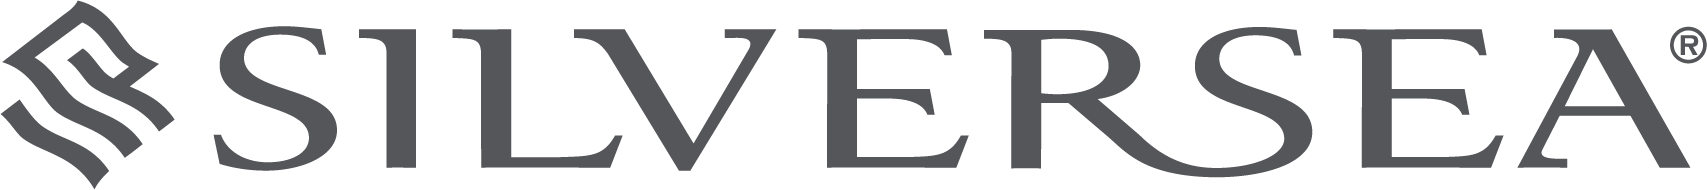 Silversea Standard logo_rgb (002)